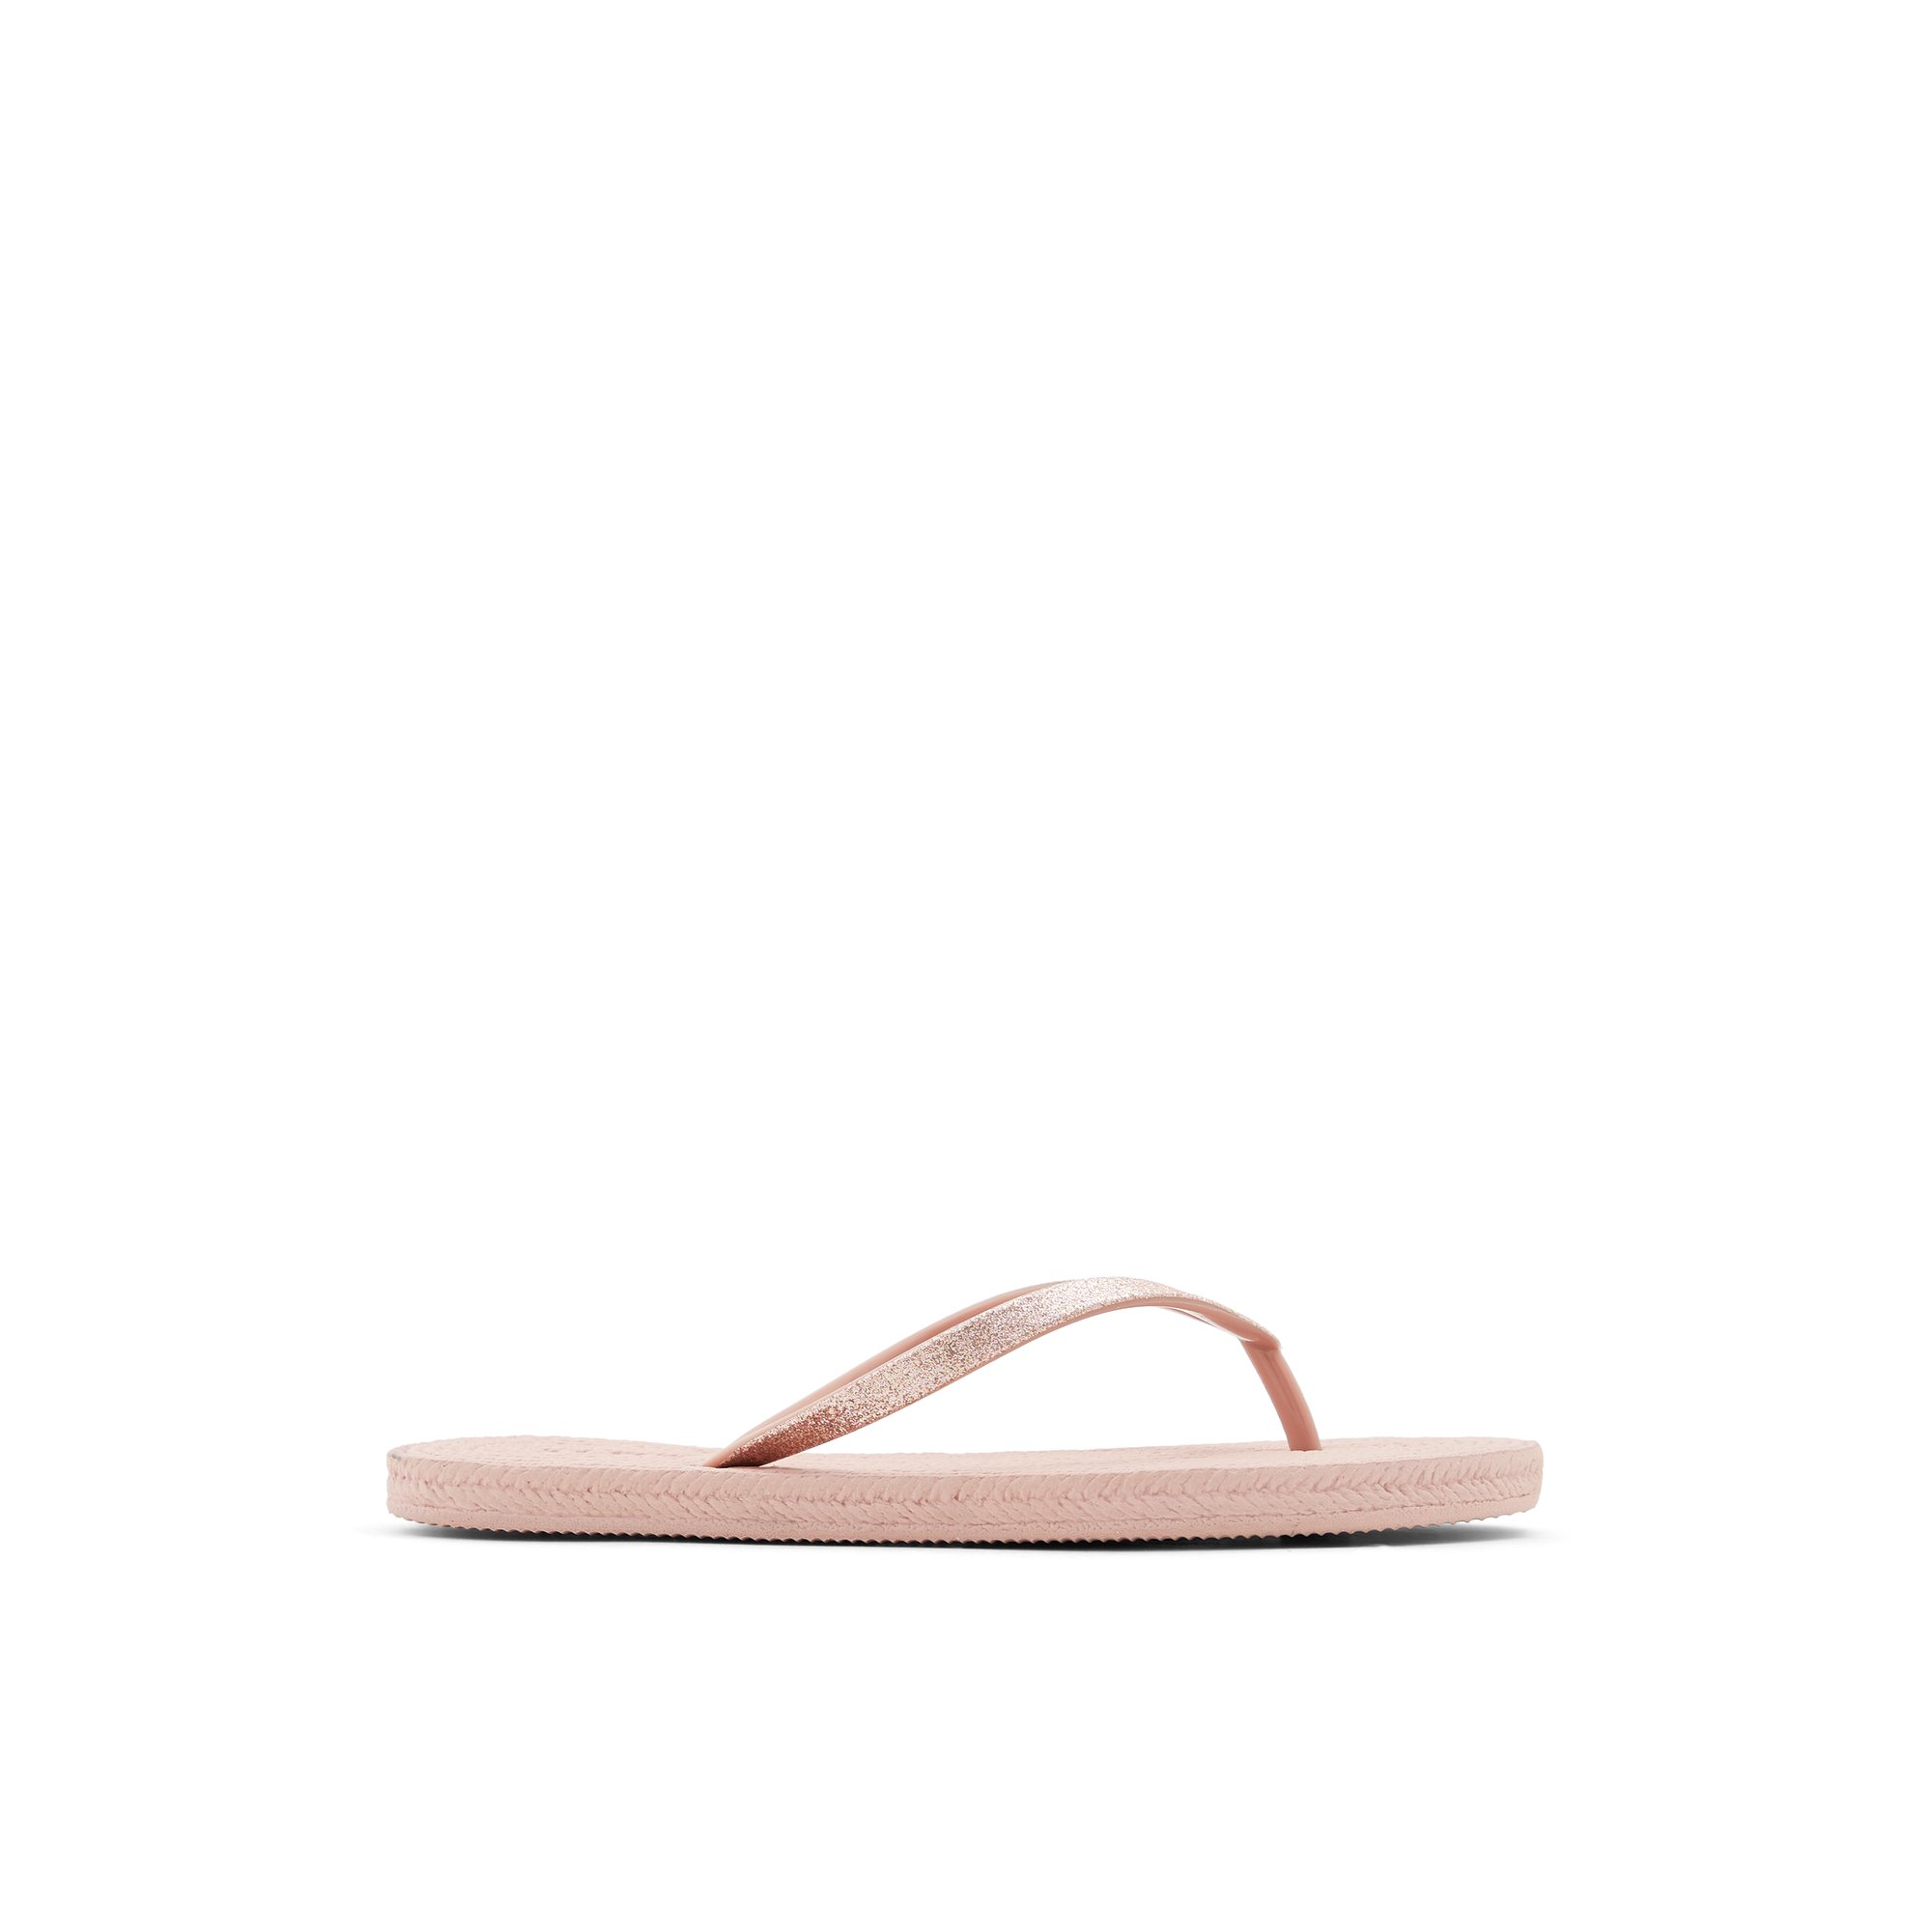 Image of ALDO Aloomba - Women's Flat Sandals - Pink, Size 9